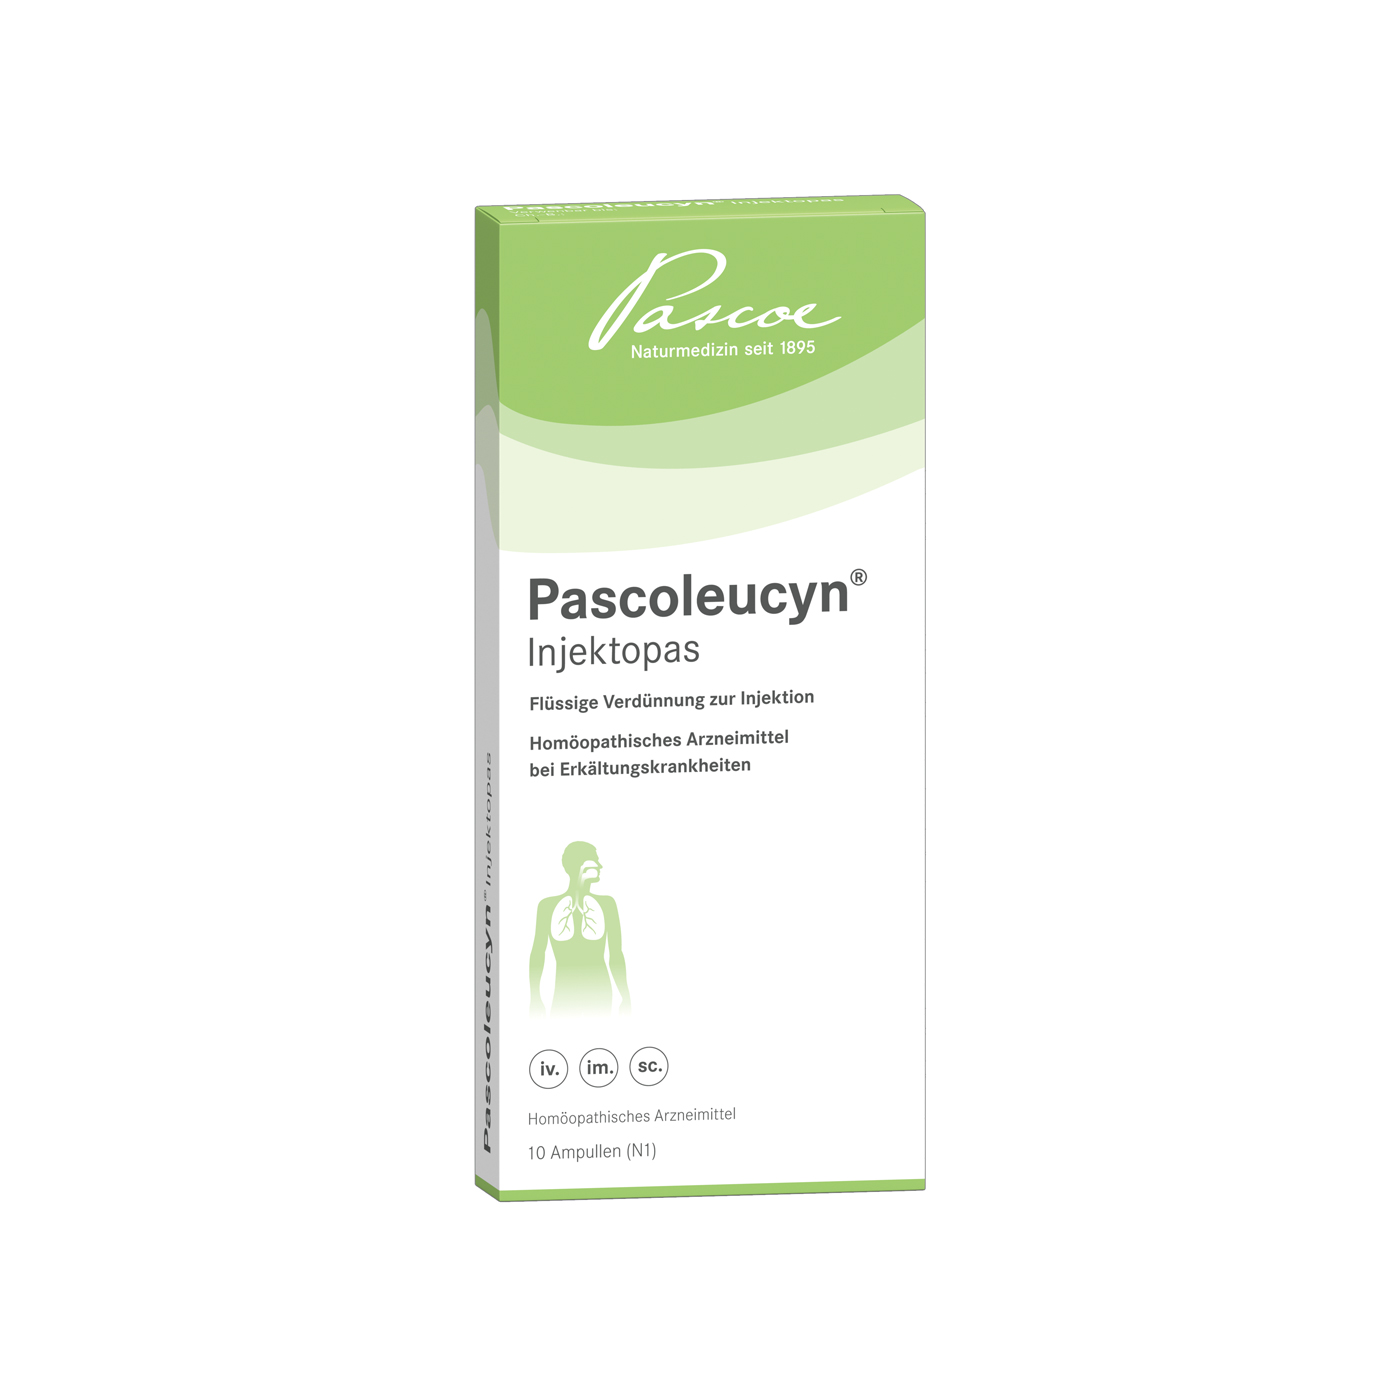 Pascoleucyn-Injektopas 10 x 2 ml Packshot PZN 04193817